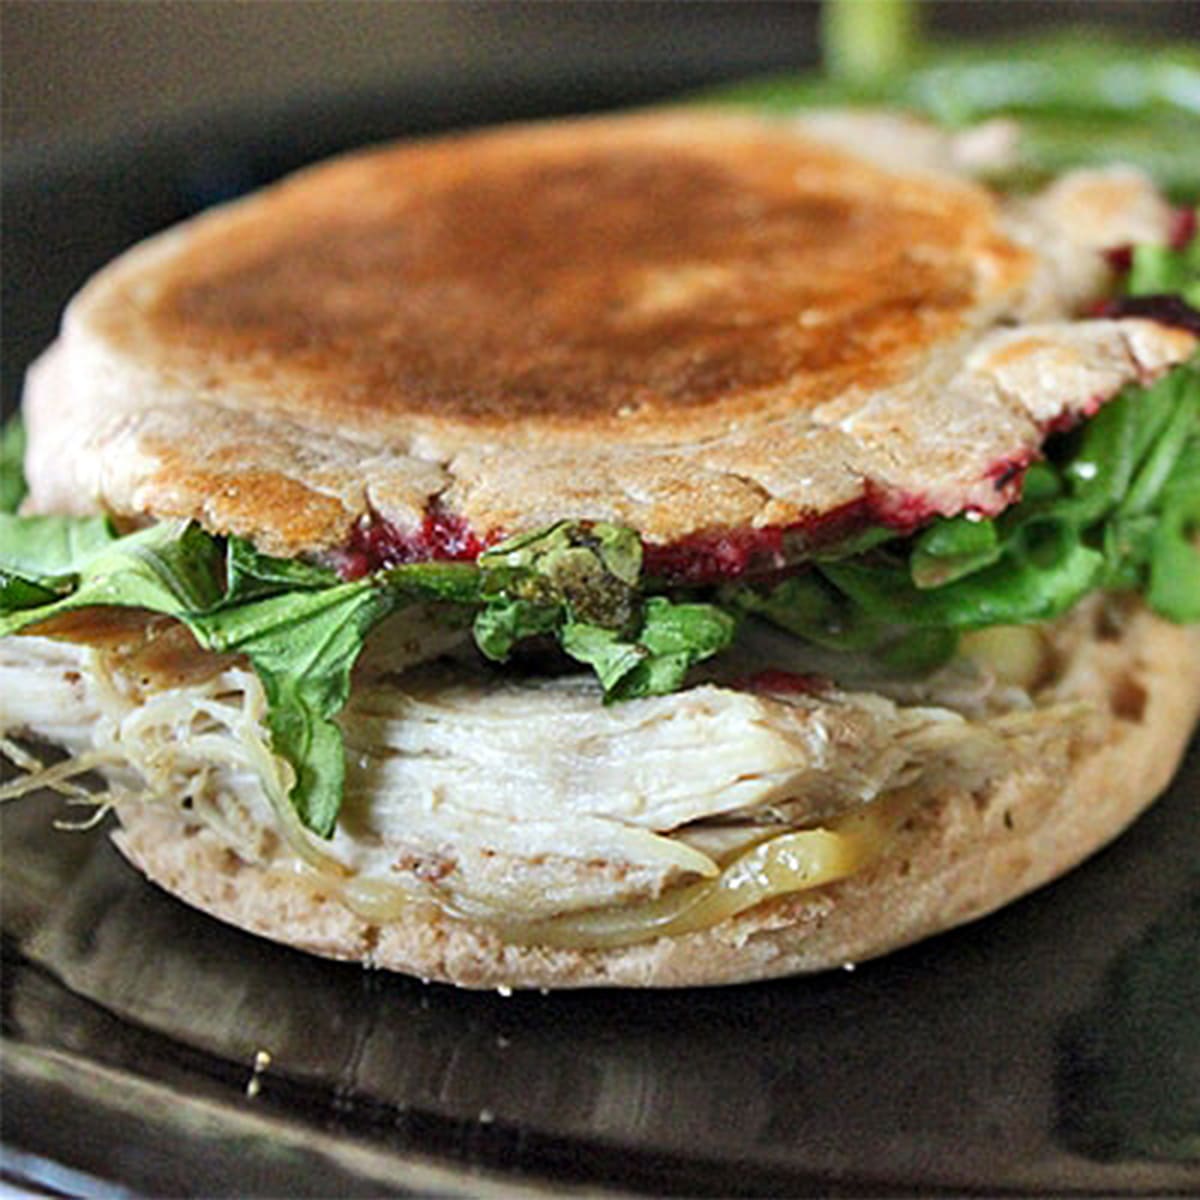 https://greenlitebites.com/wp-content/uploads/2013/11/leftover-turkey-sandwich-pressed-featured.jpg